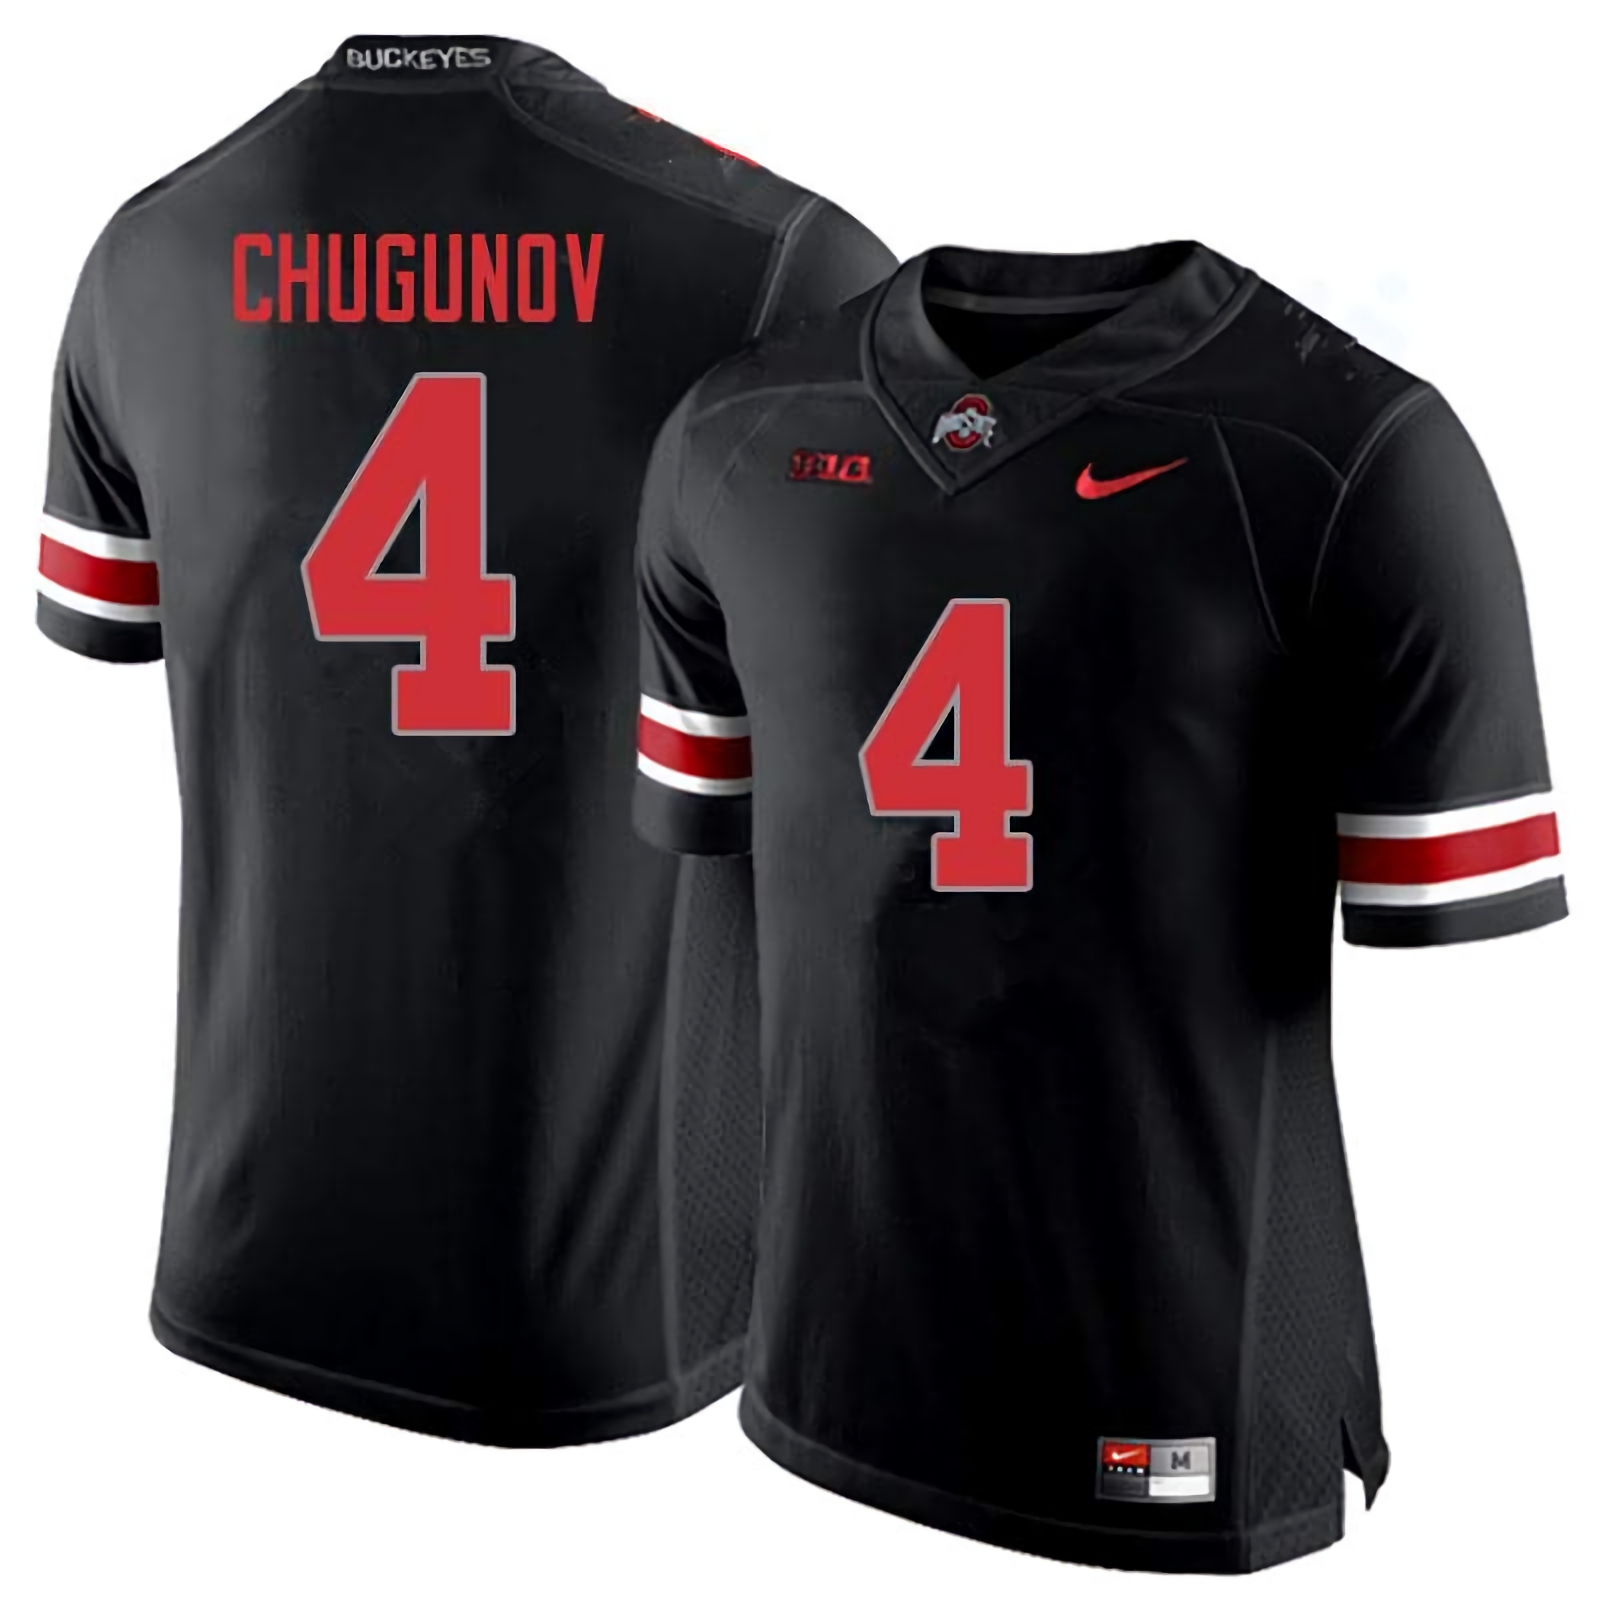 Chris Chugunov Ohio State Buckeyes Men's NCAA #4 Nike Blackout College Stitched Football Jersey QEO6256TP